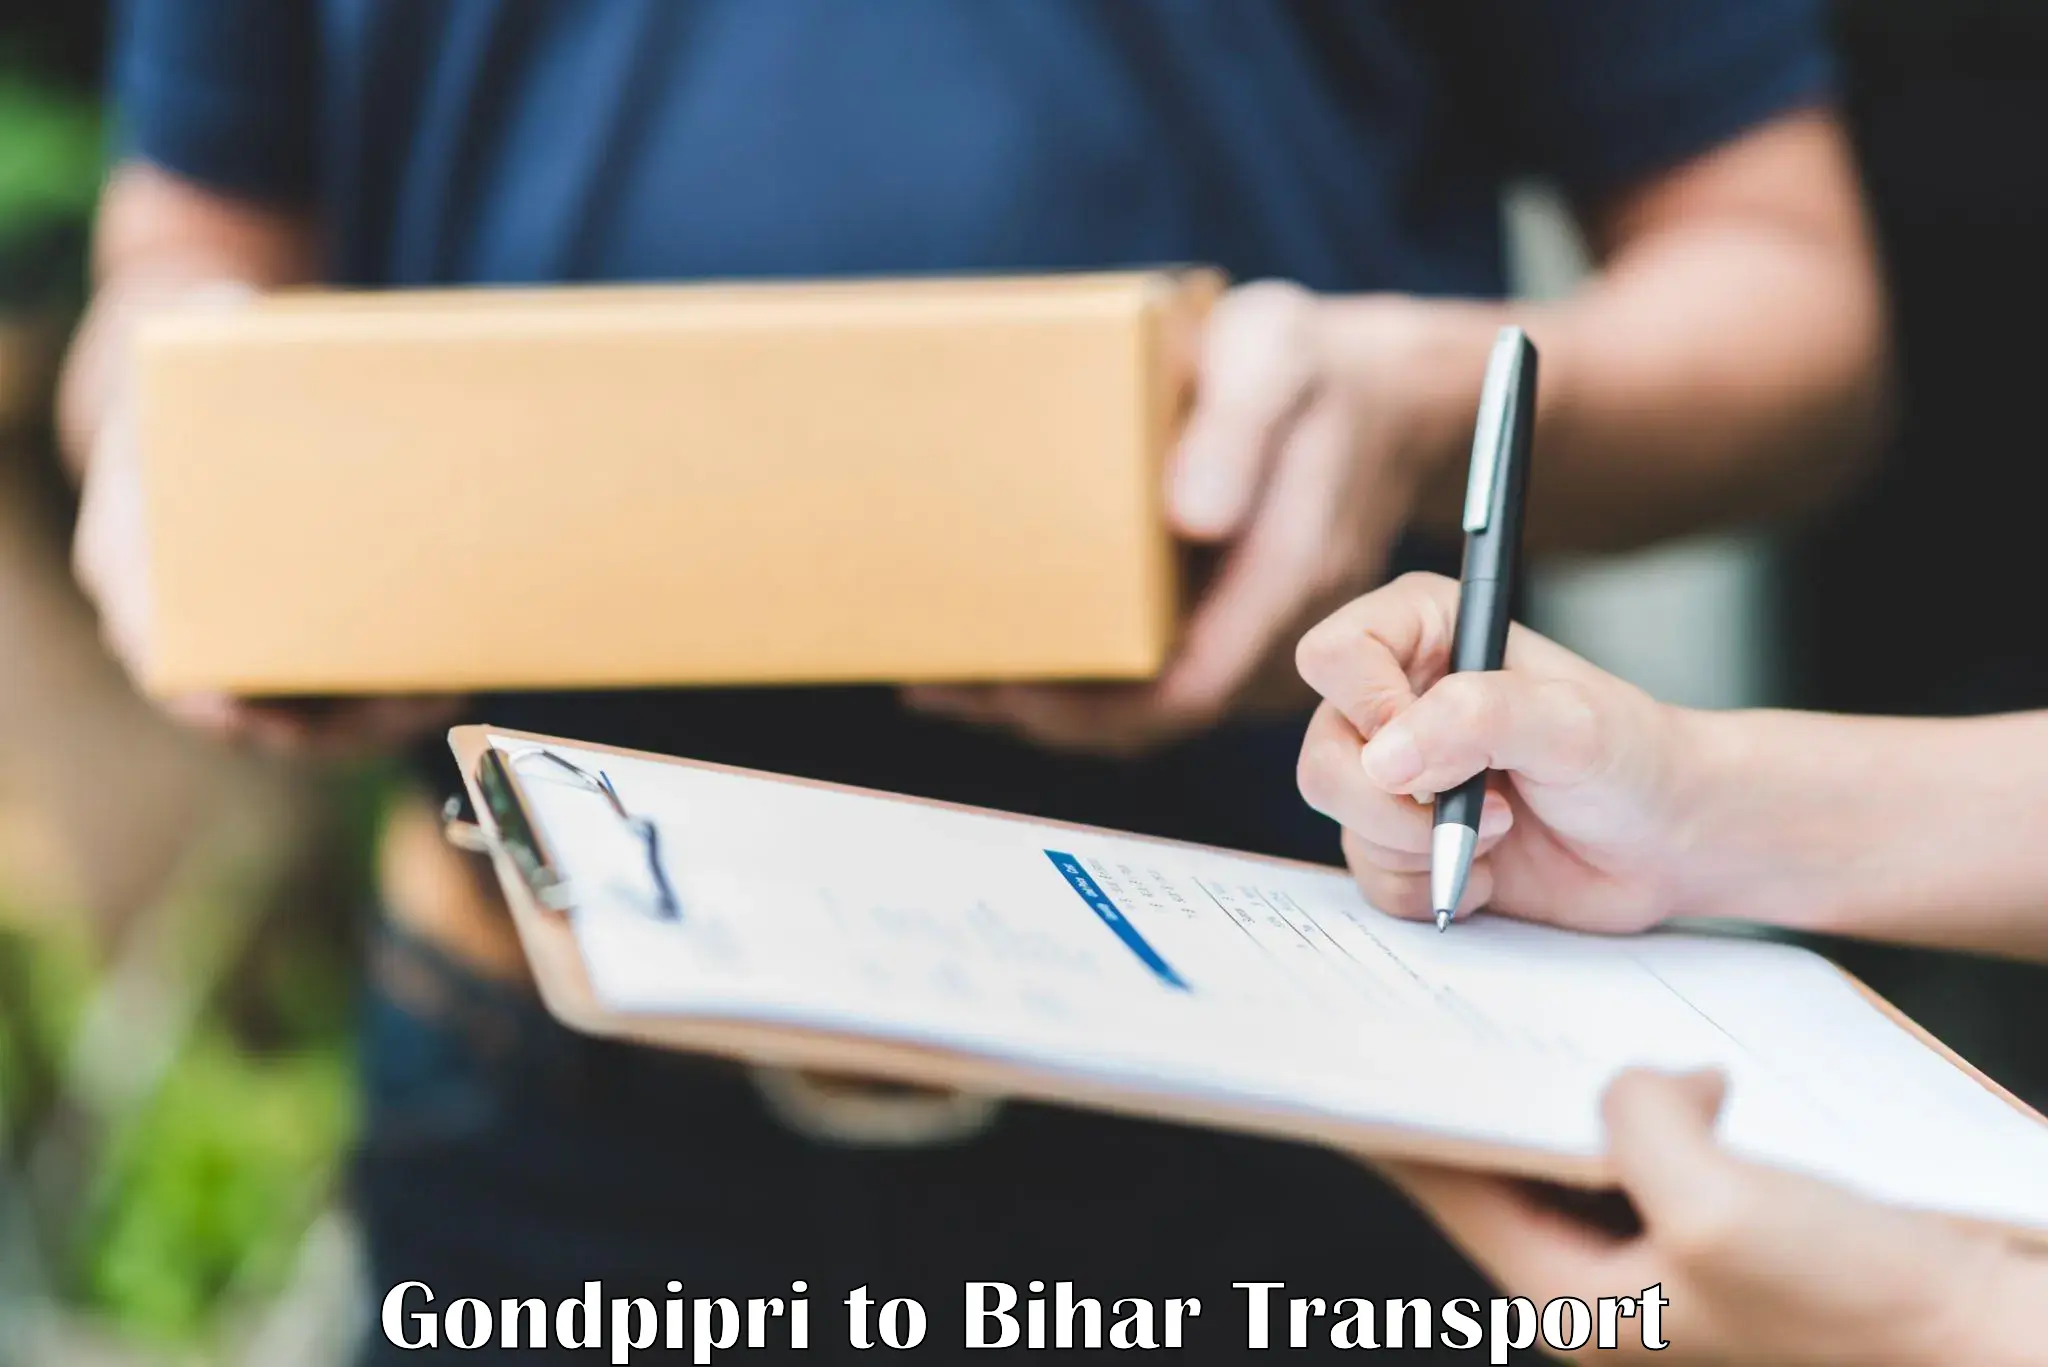 Express transport services Gondpipri to Biraul